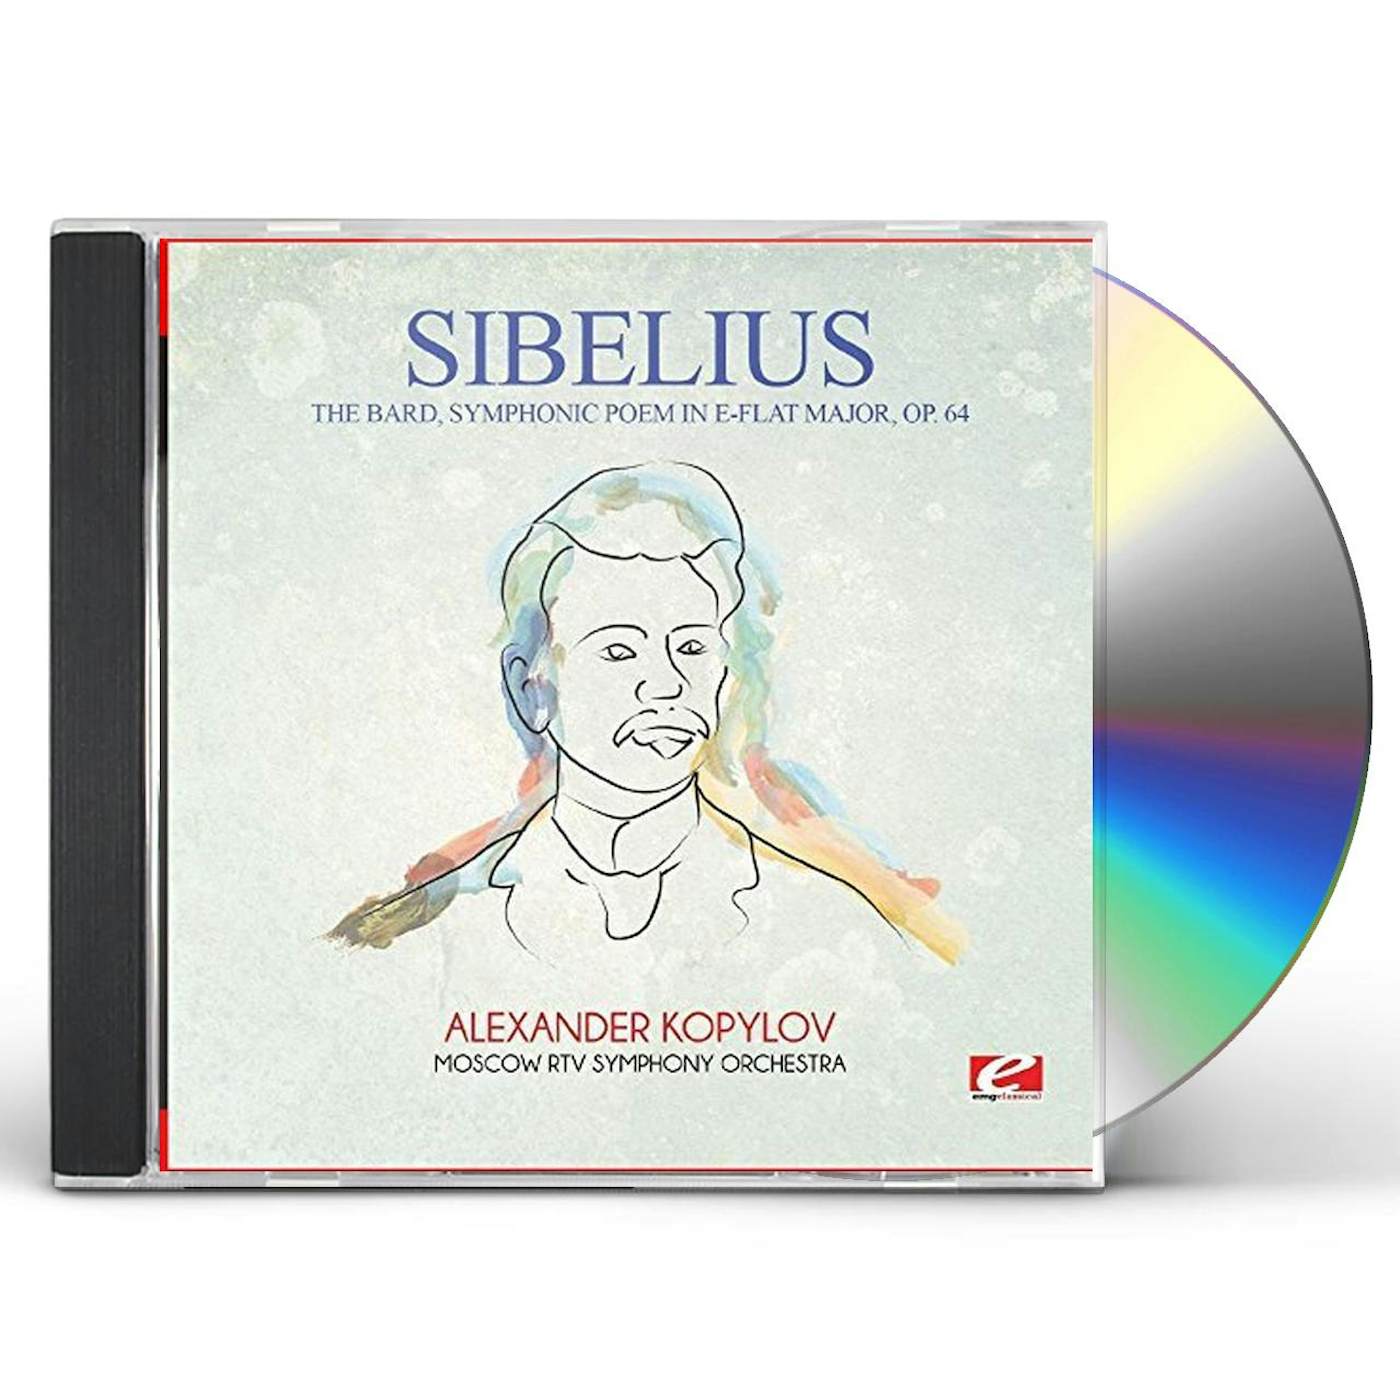 Sibelius THE BARD SYMPHONIC POEM IN E-FLAT MAJOR OP. 64 CD